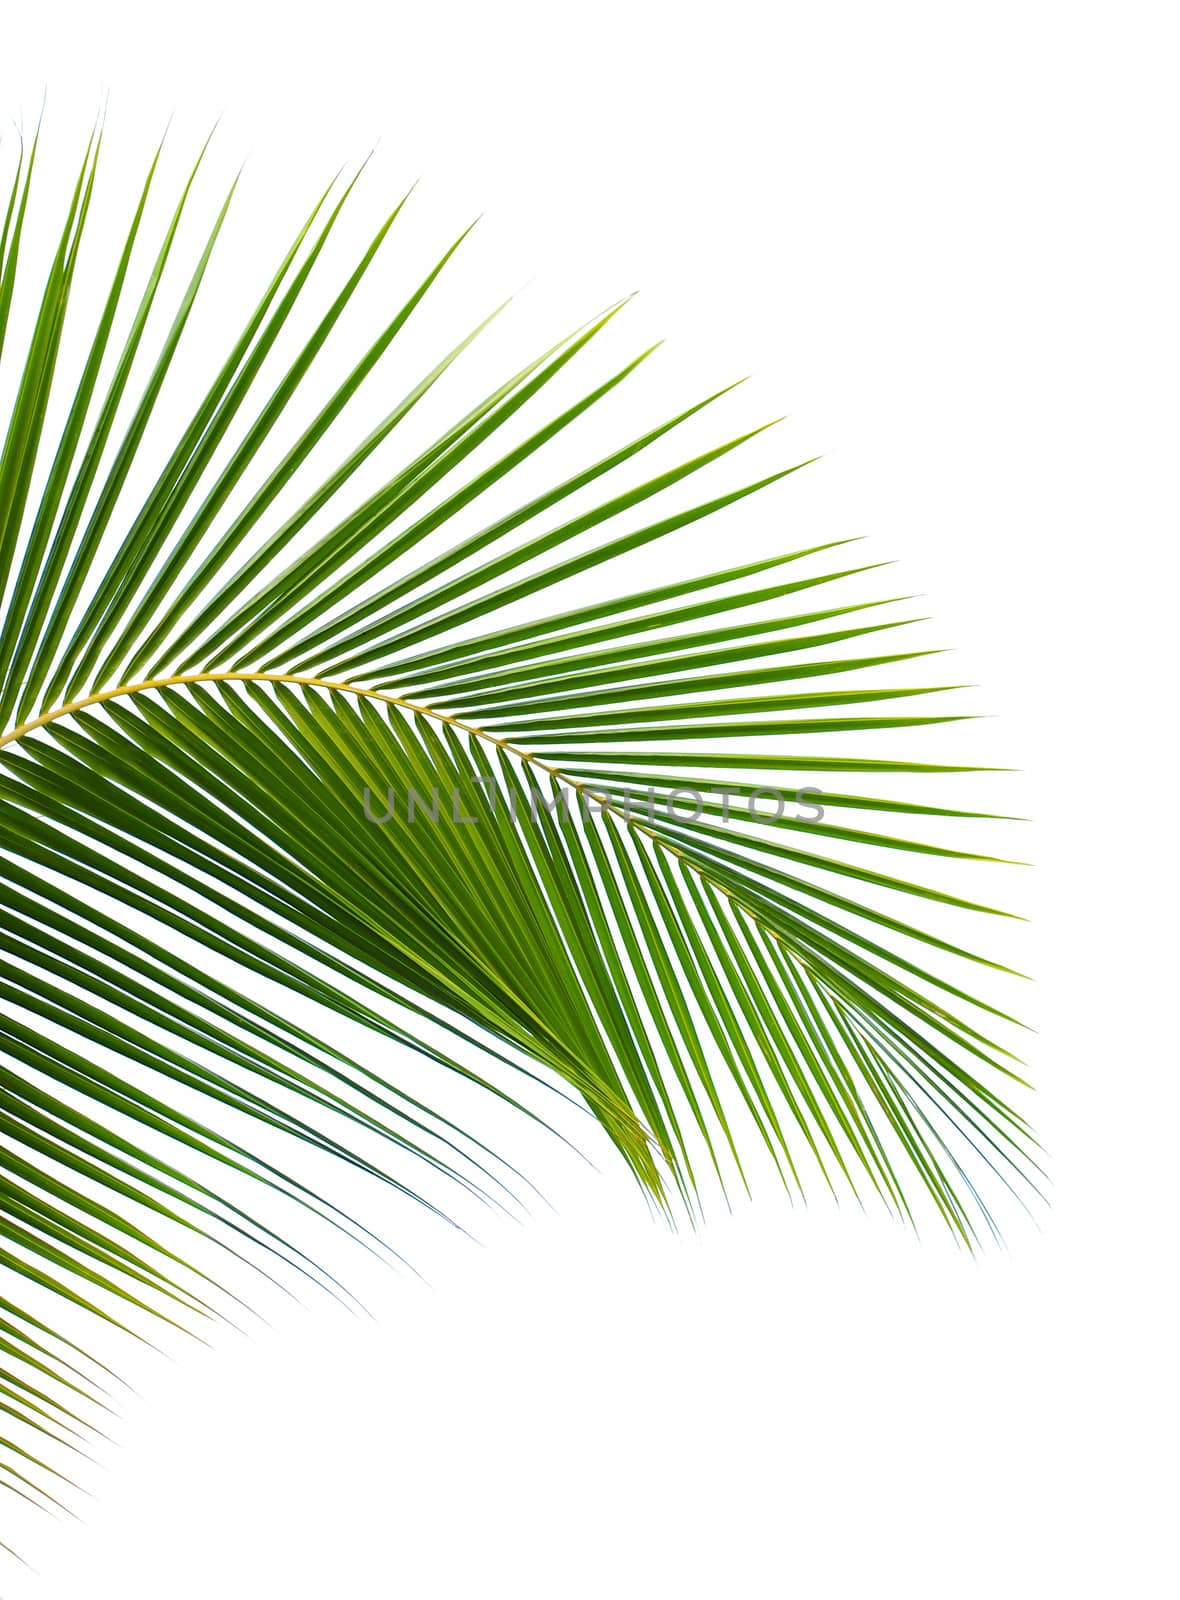 Palm leaf by antpkr